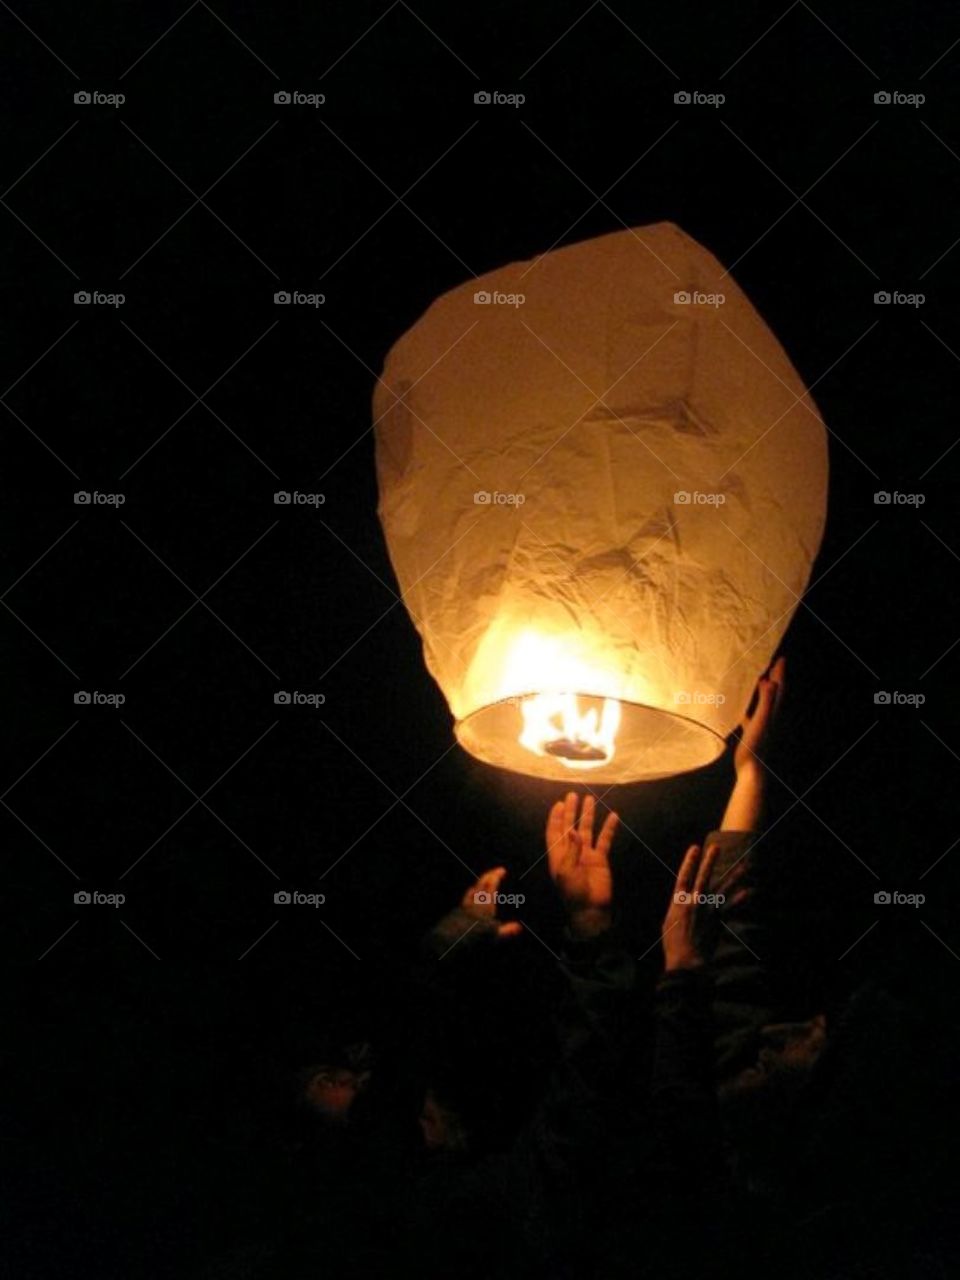 Launching a floating lantern 